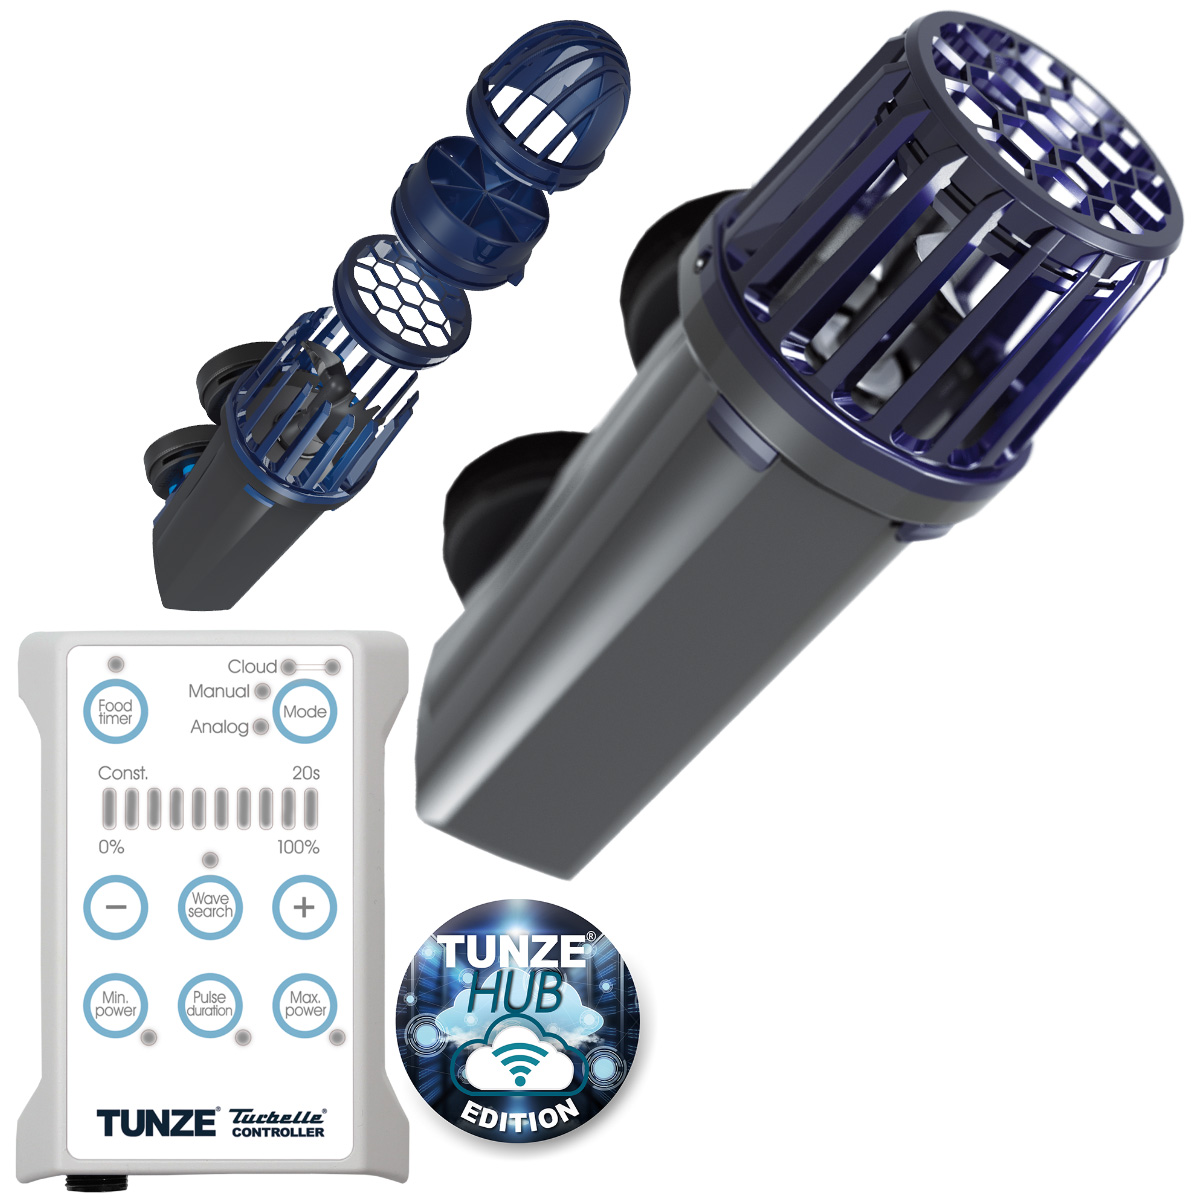 TUNZE Turbelle® stream 3 (6150.005) HUB Edition